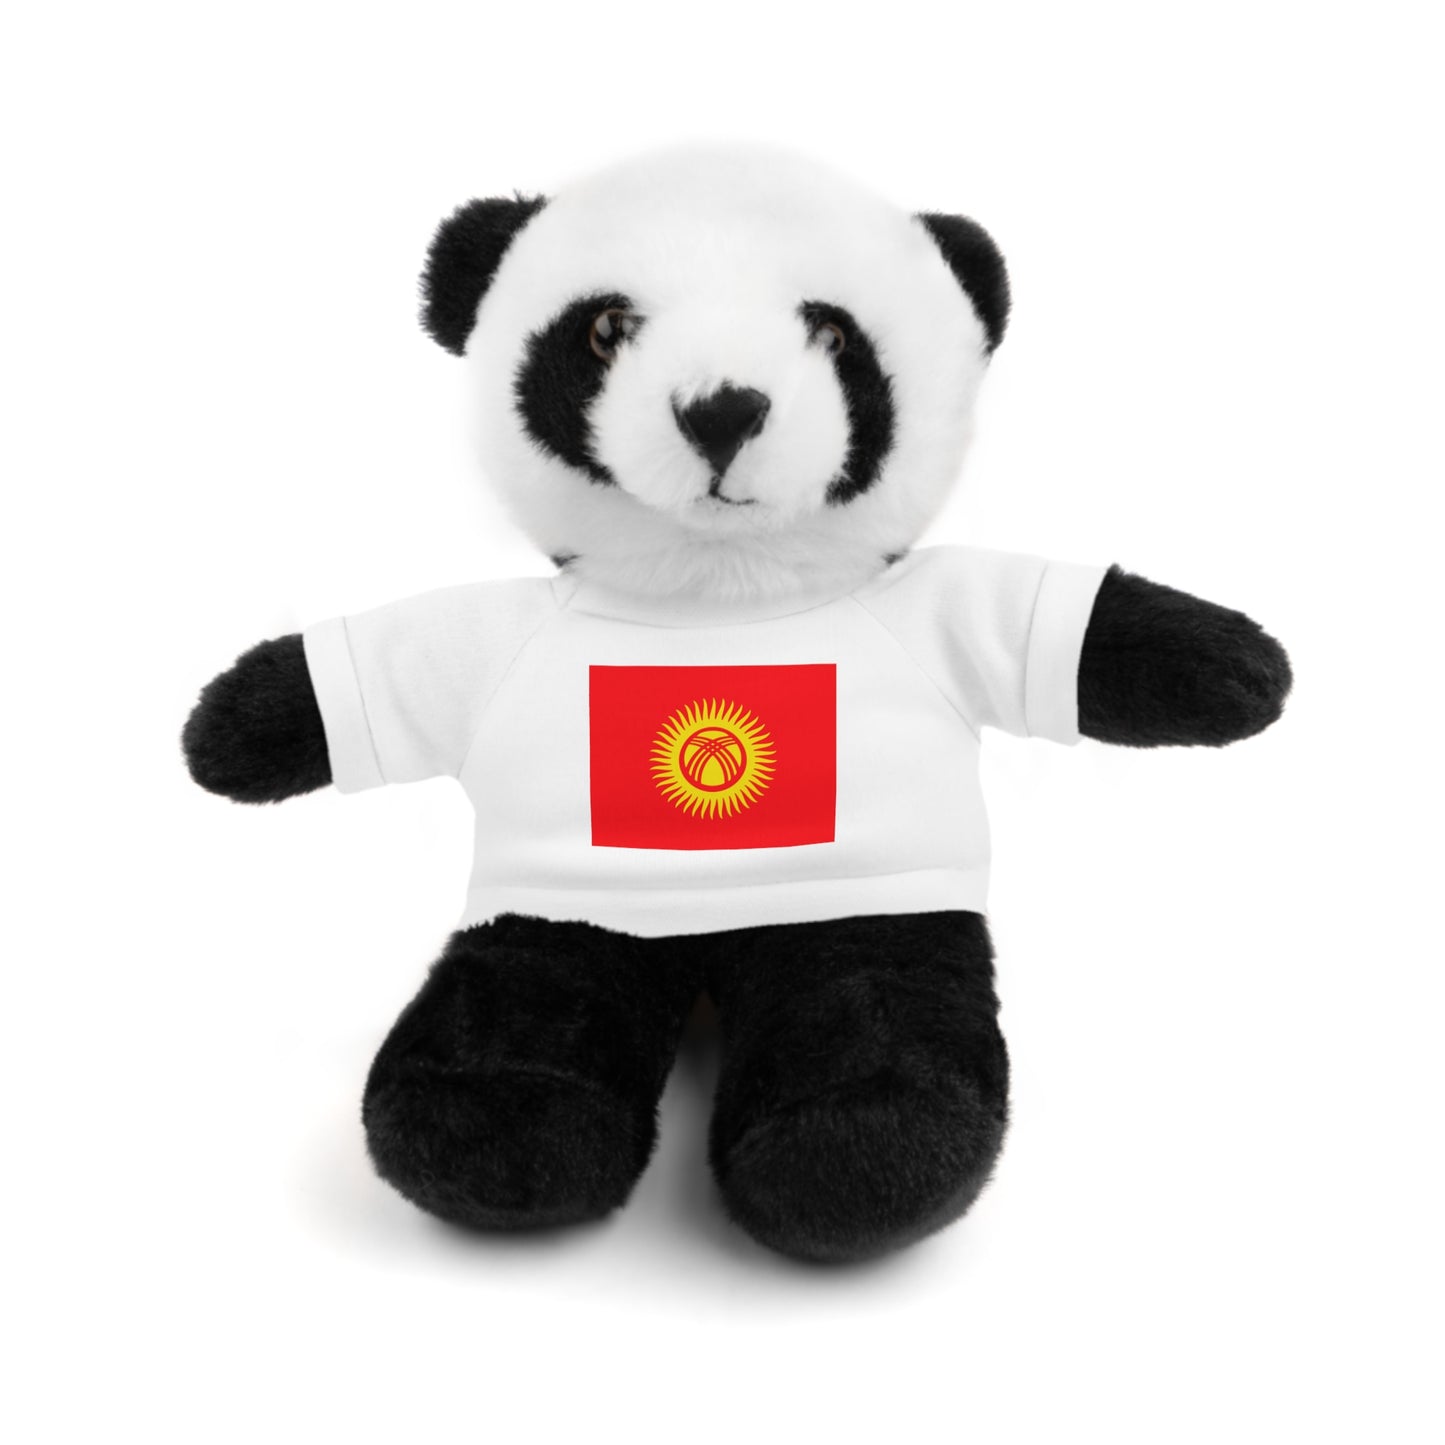 Kyrgyzstan Flag Stuffed Animals with Tee